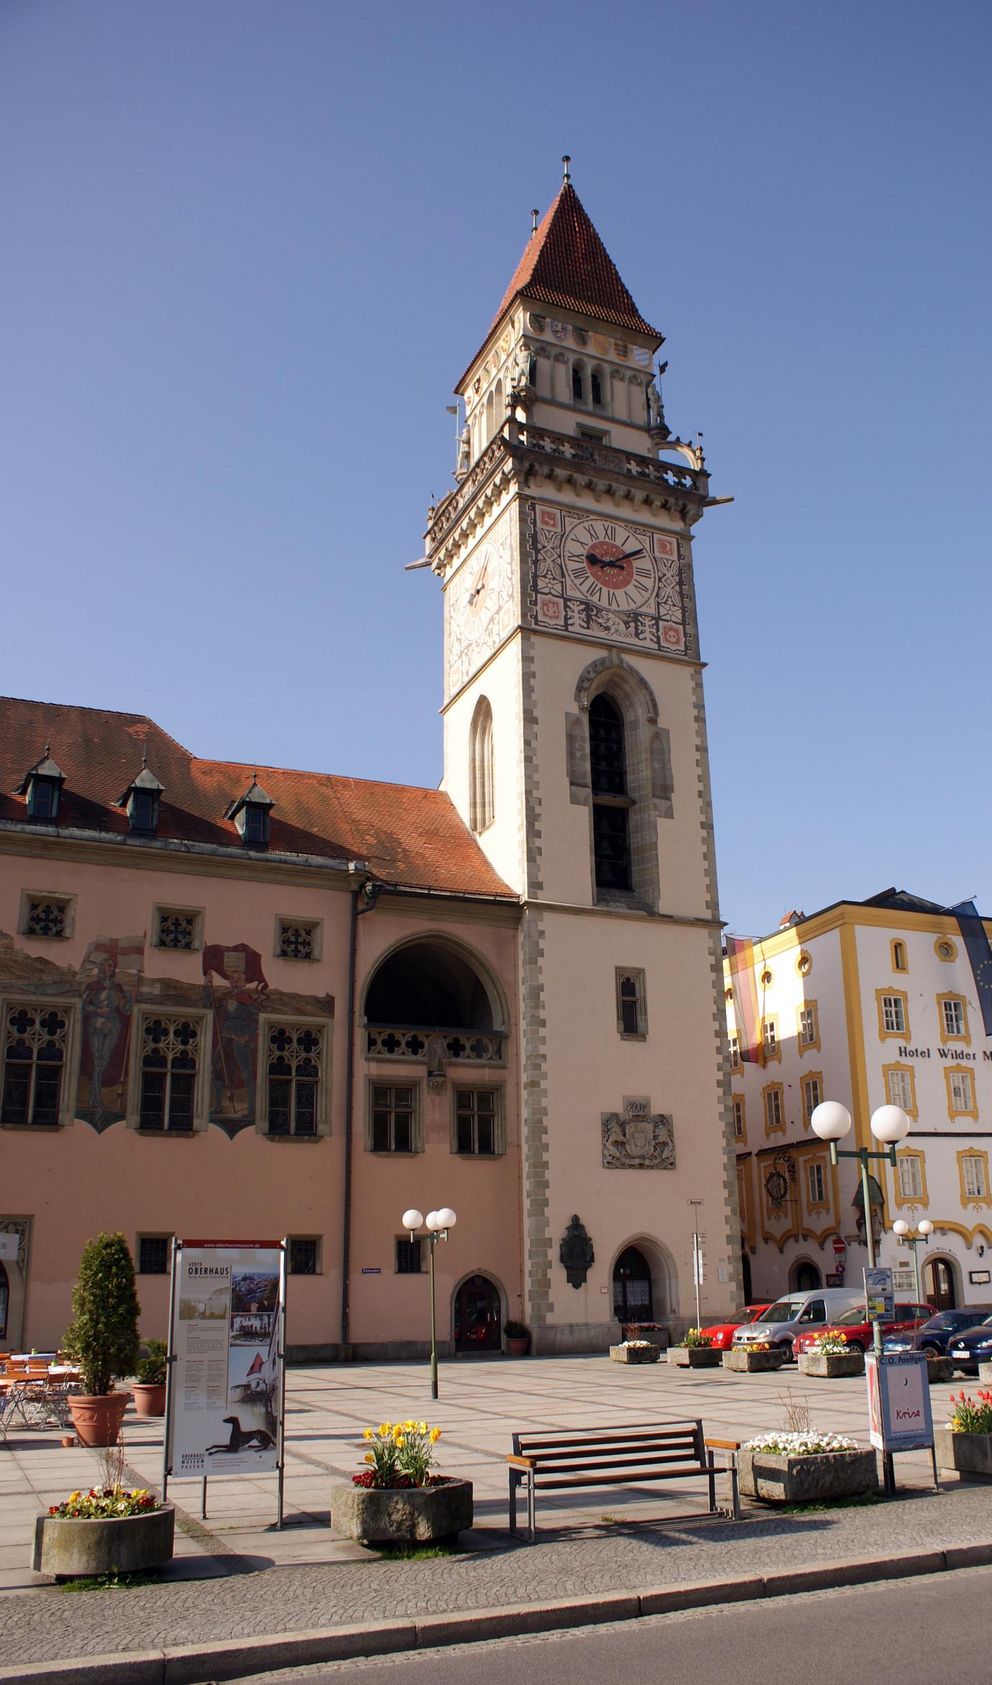 Passau's city hall